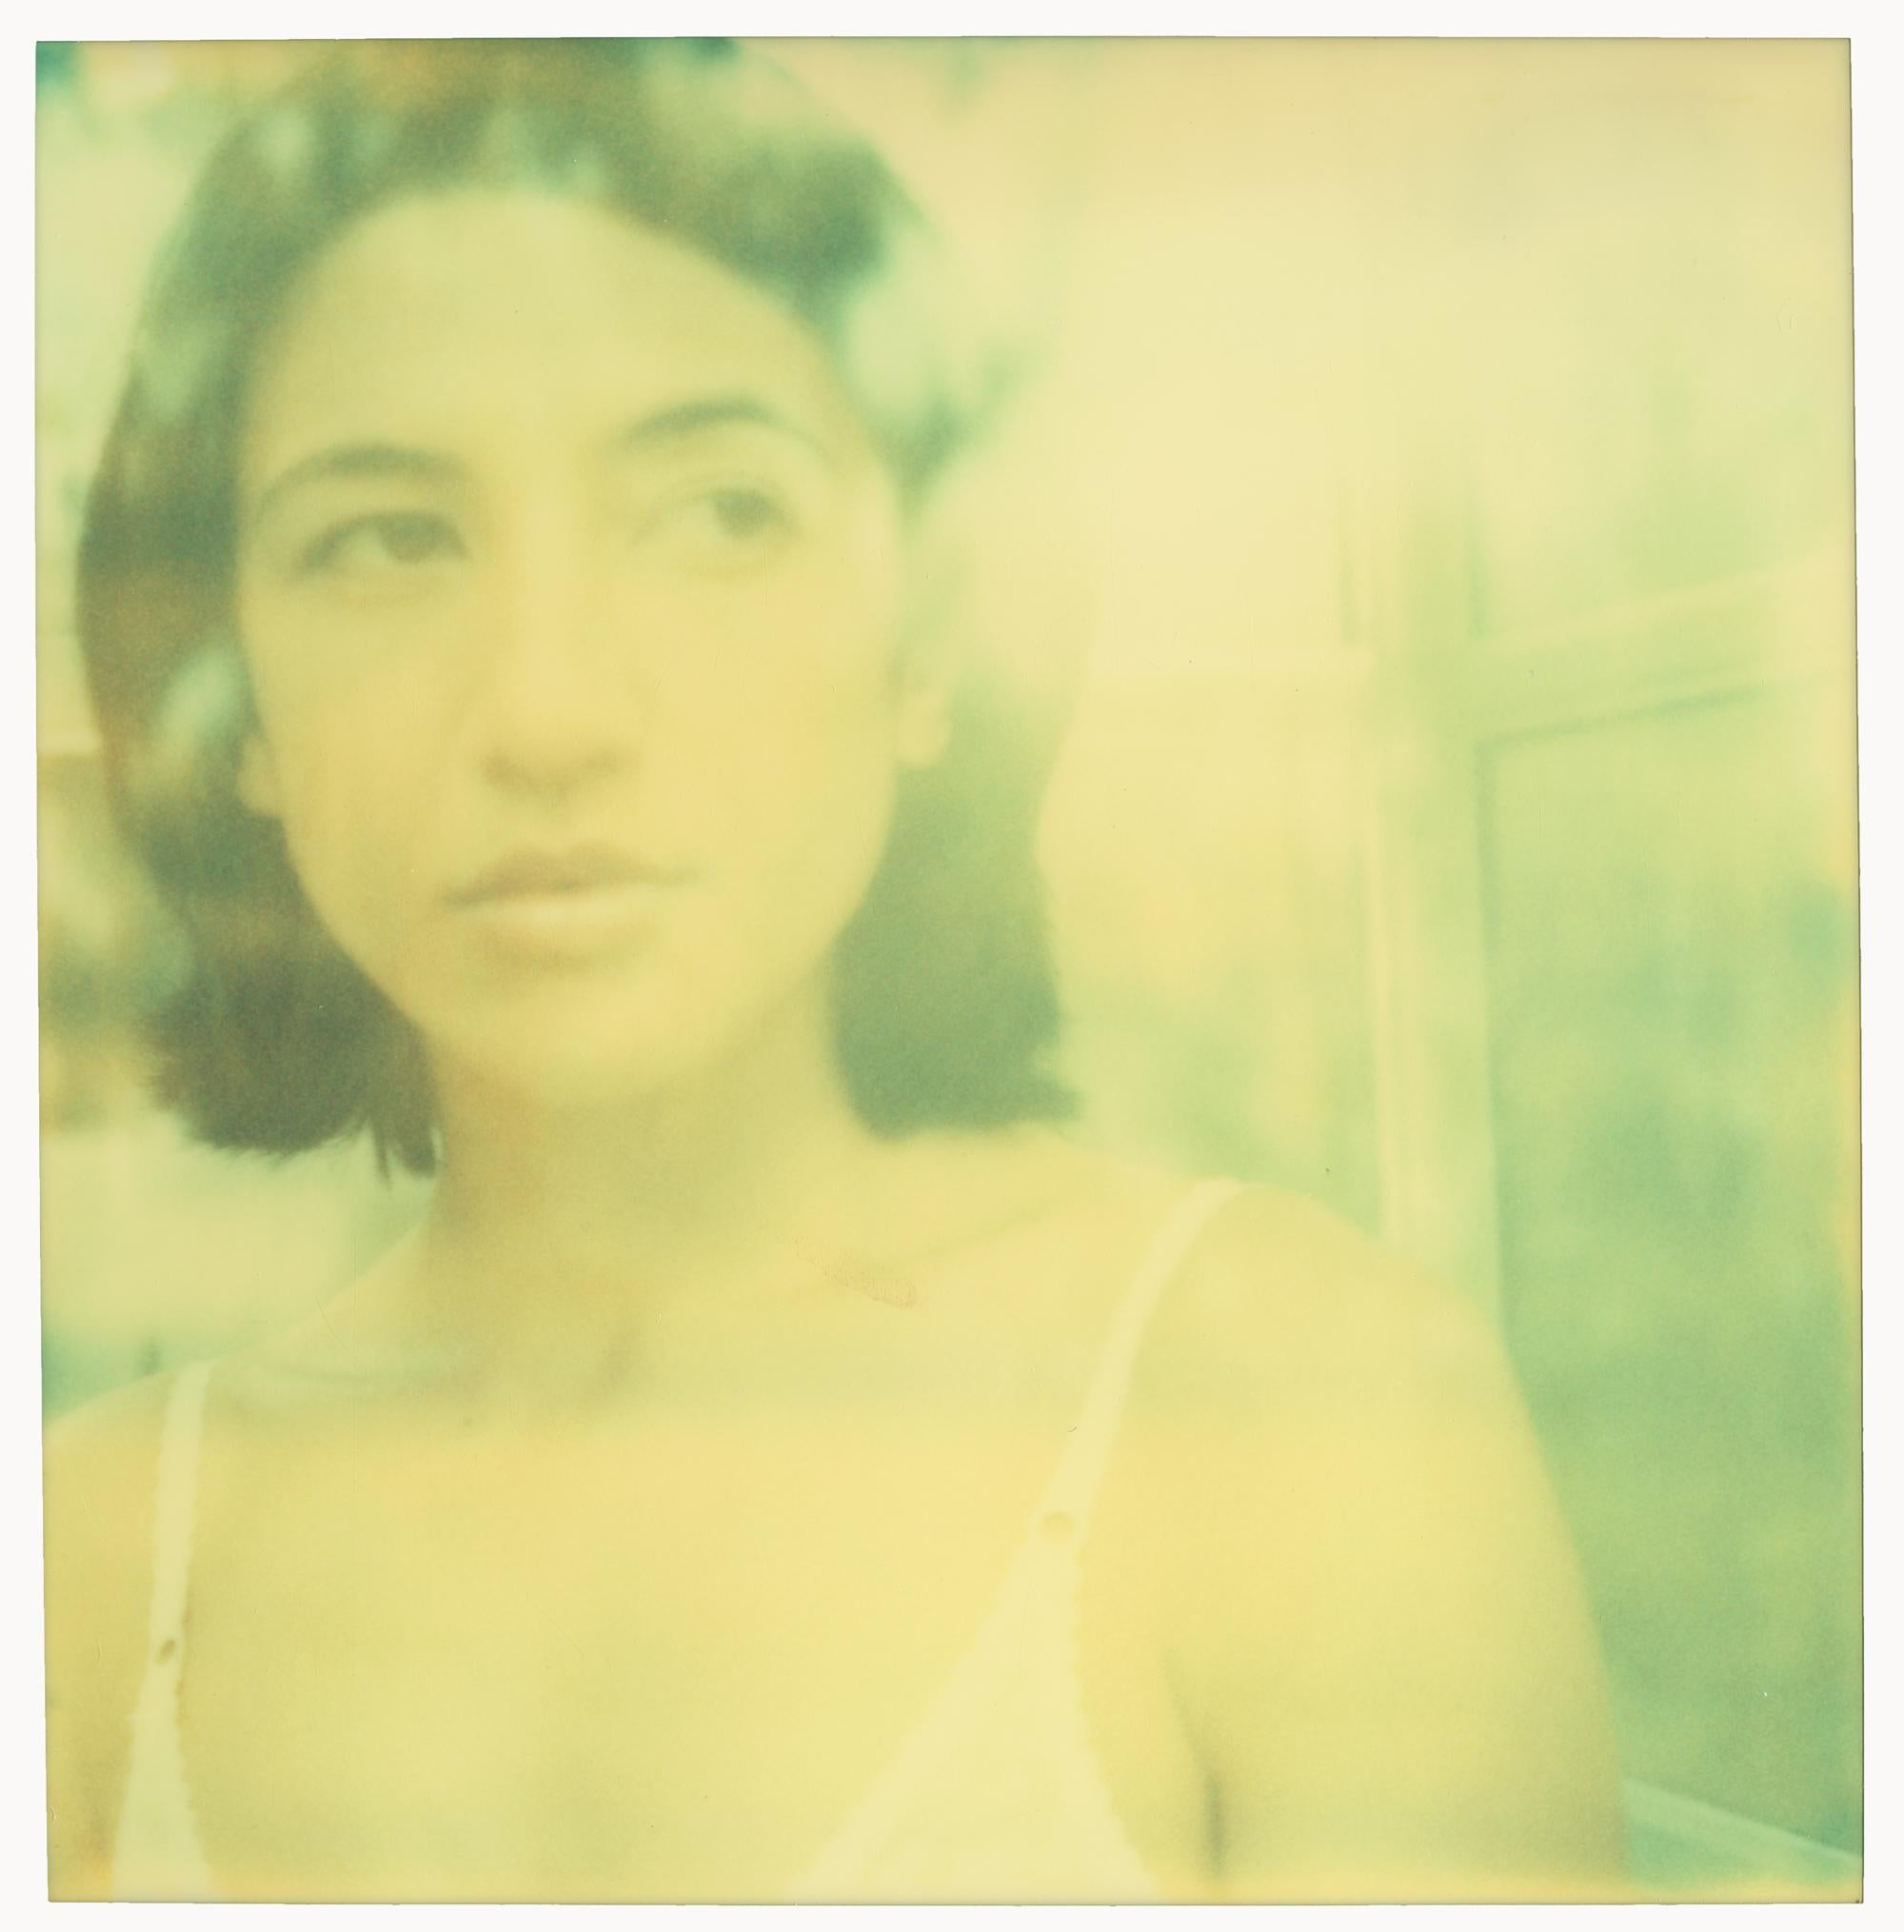 Nude Photograph Stefanie Schneider - Enchanted (Saigon) - impression vintage analogique, 58 x56 cm